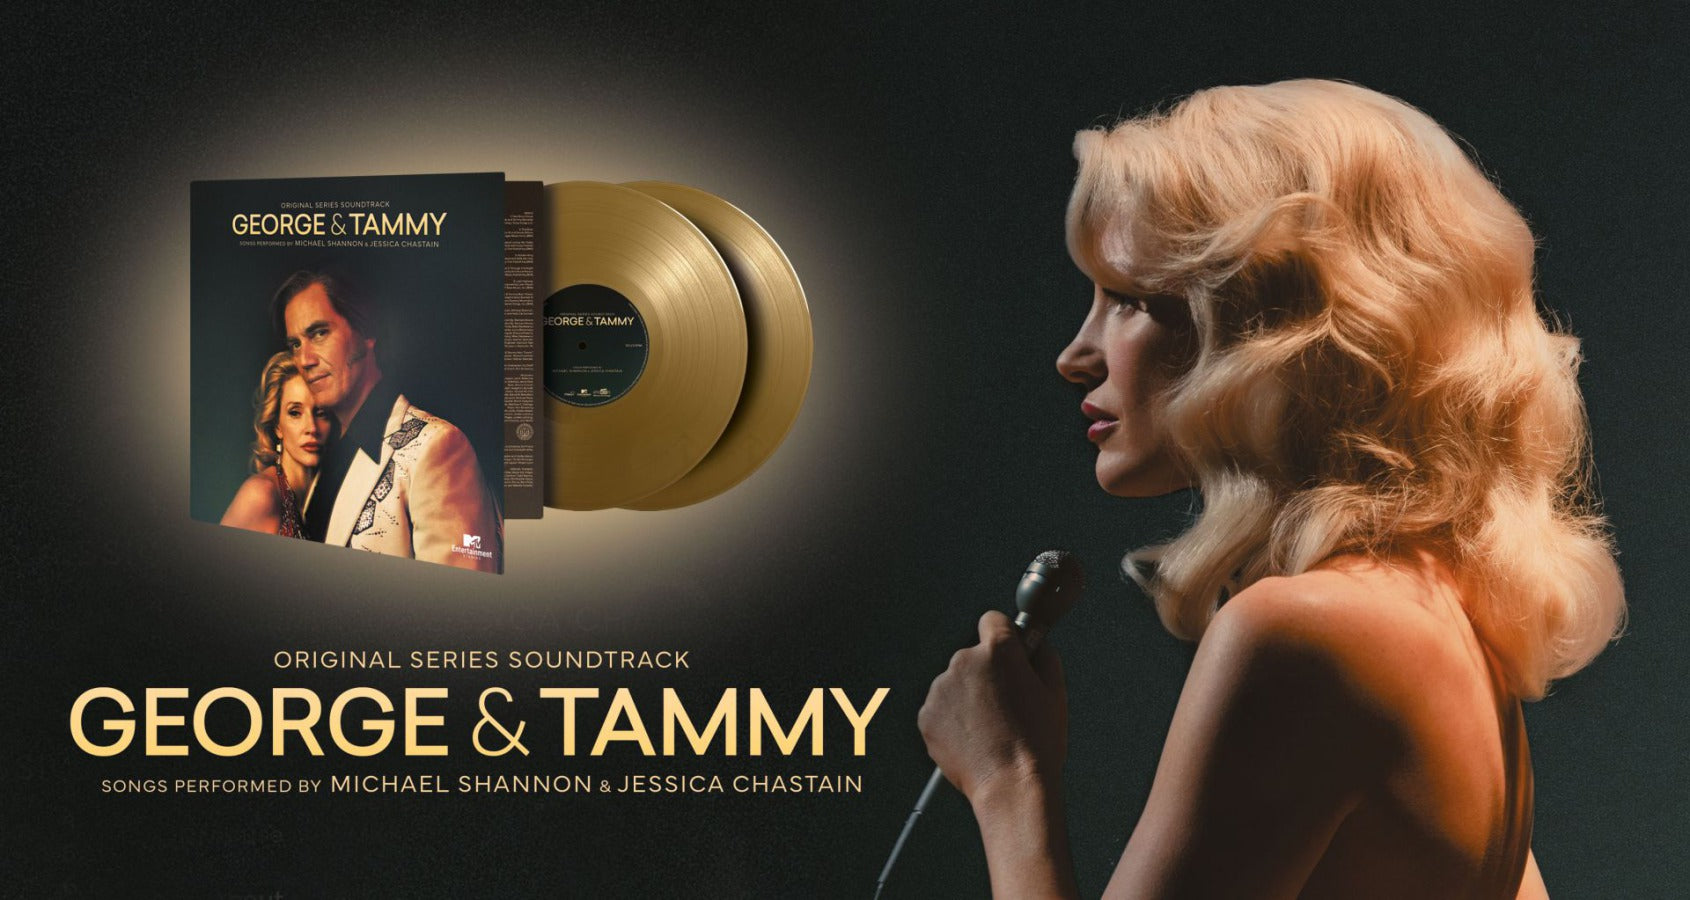 MICHAEL SHANNON & JESSICA CHASTAIN - George & Tammy (Original Series Soundtrack) - 2LP - Gatefold 180g Gold Vinyl